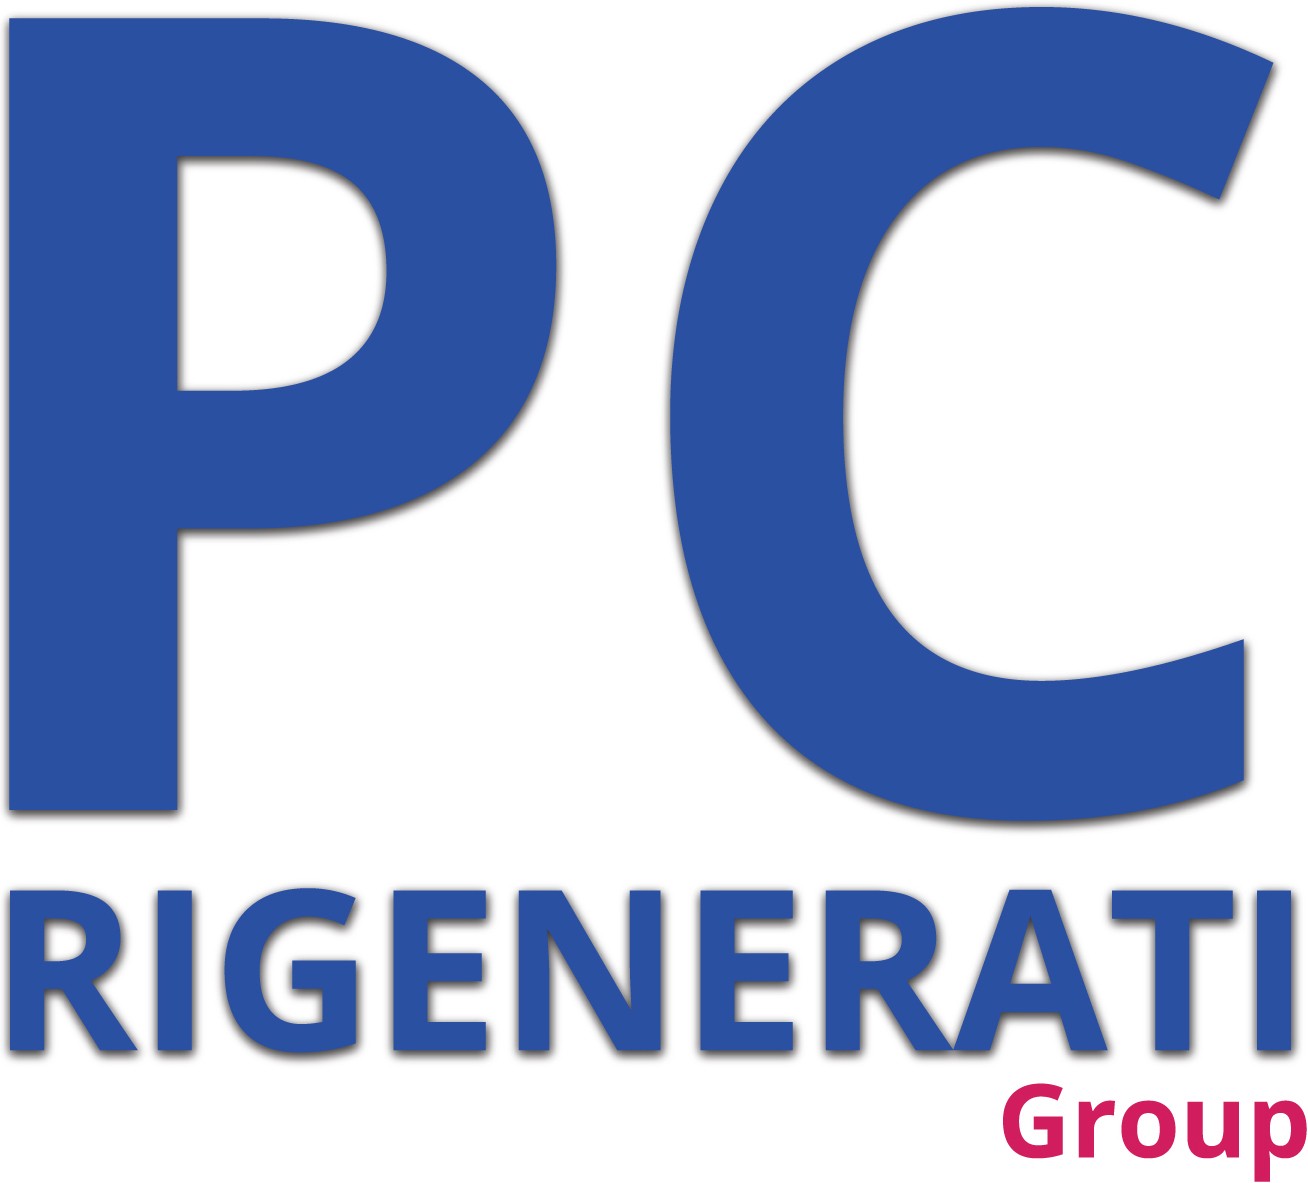 PC RIGENERATI GROUP